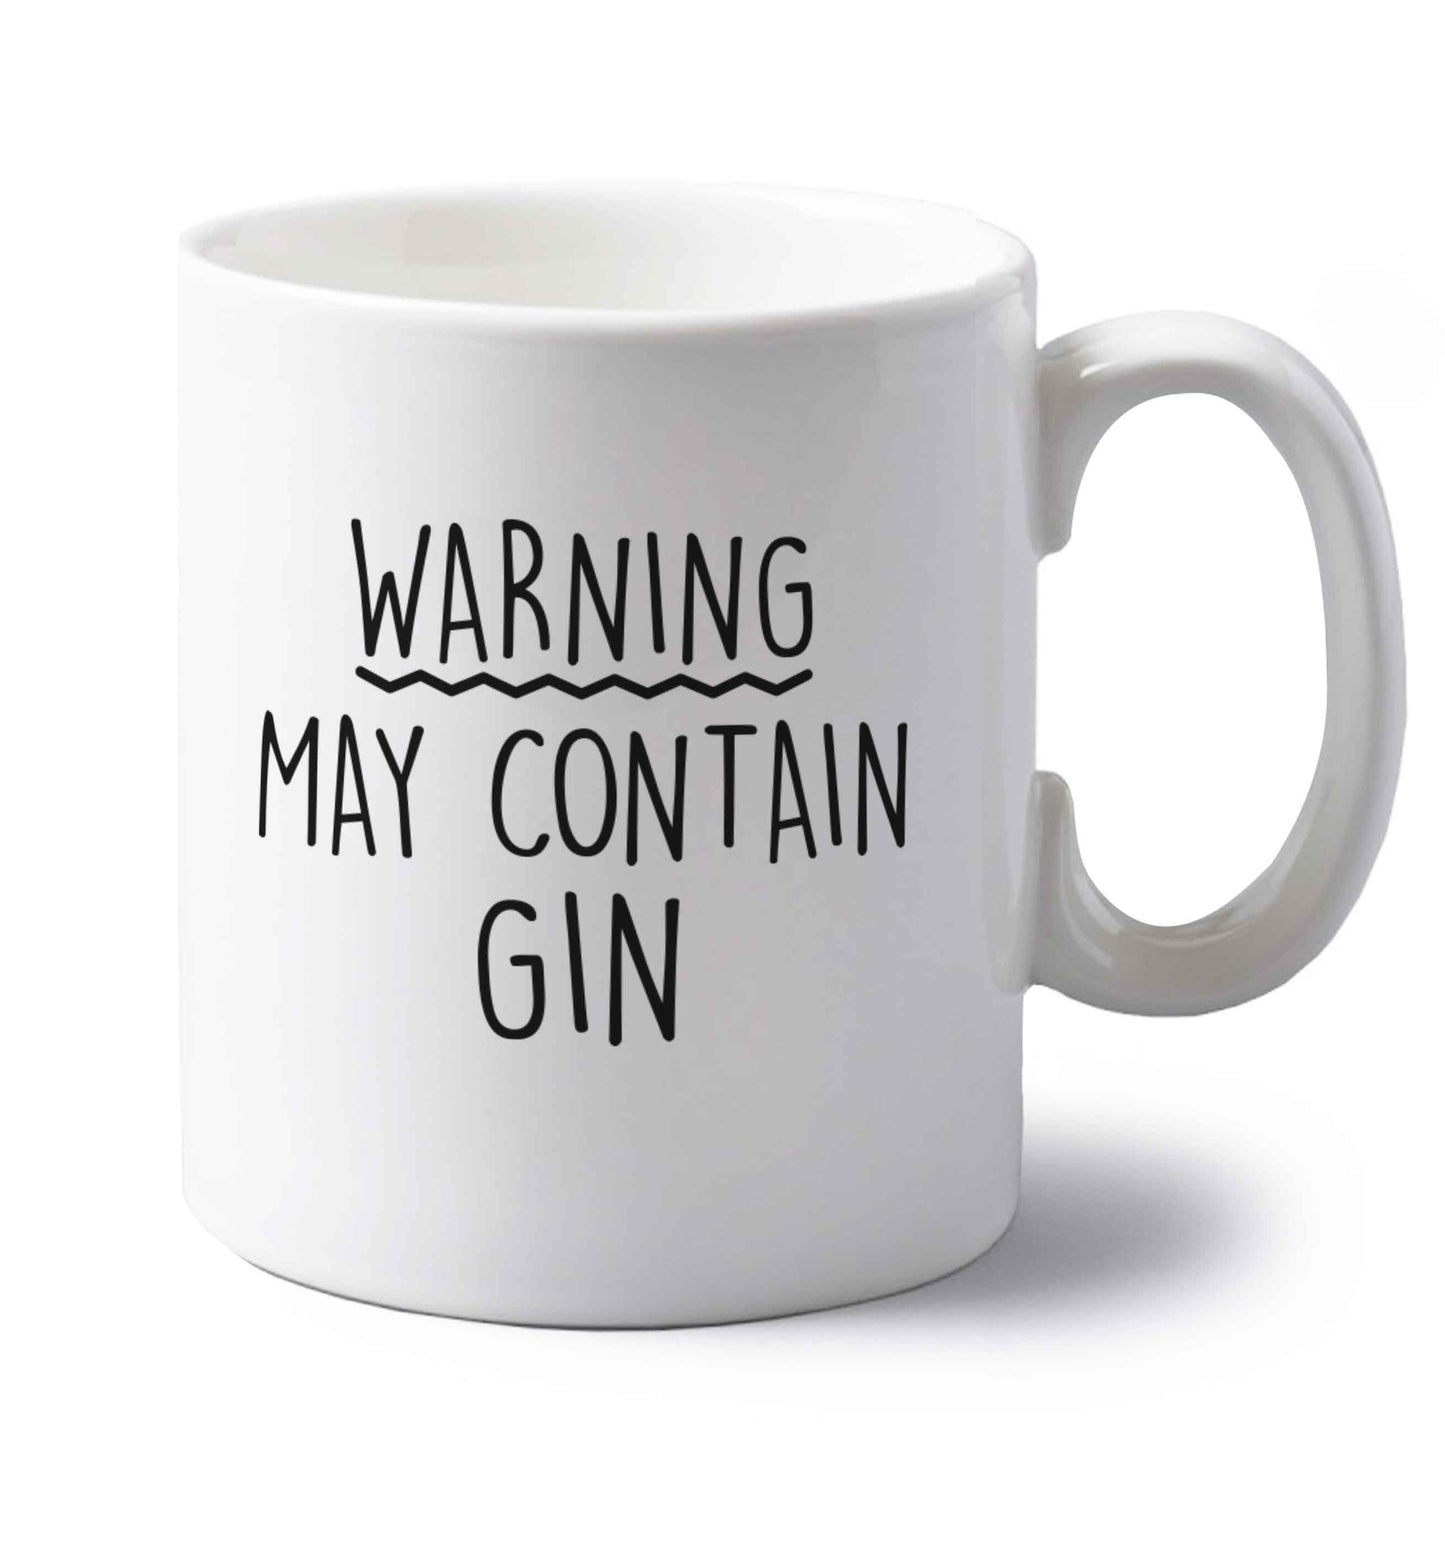 Warning may contain gin left handed white ceramic mug 